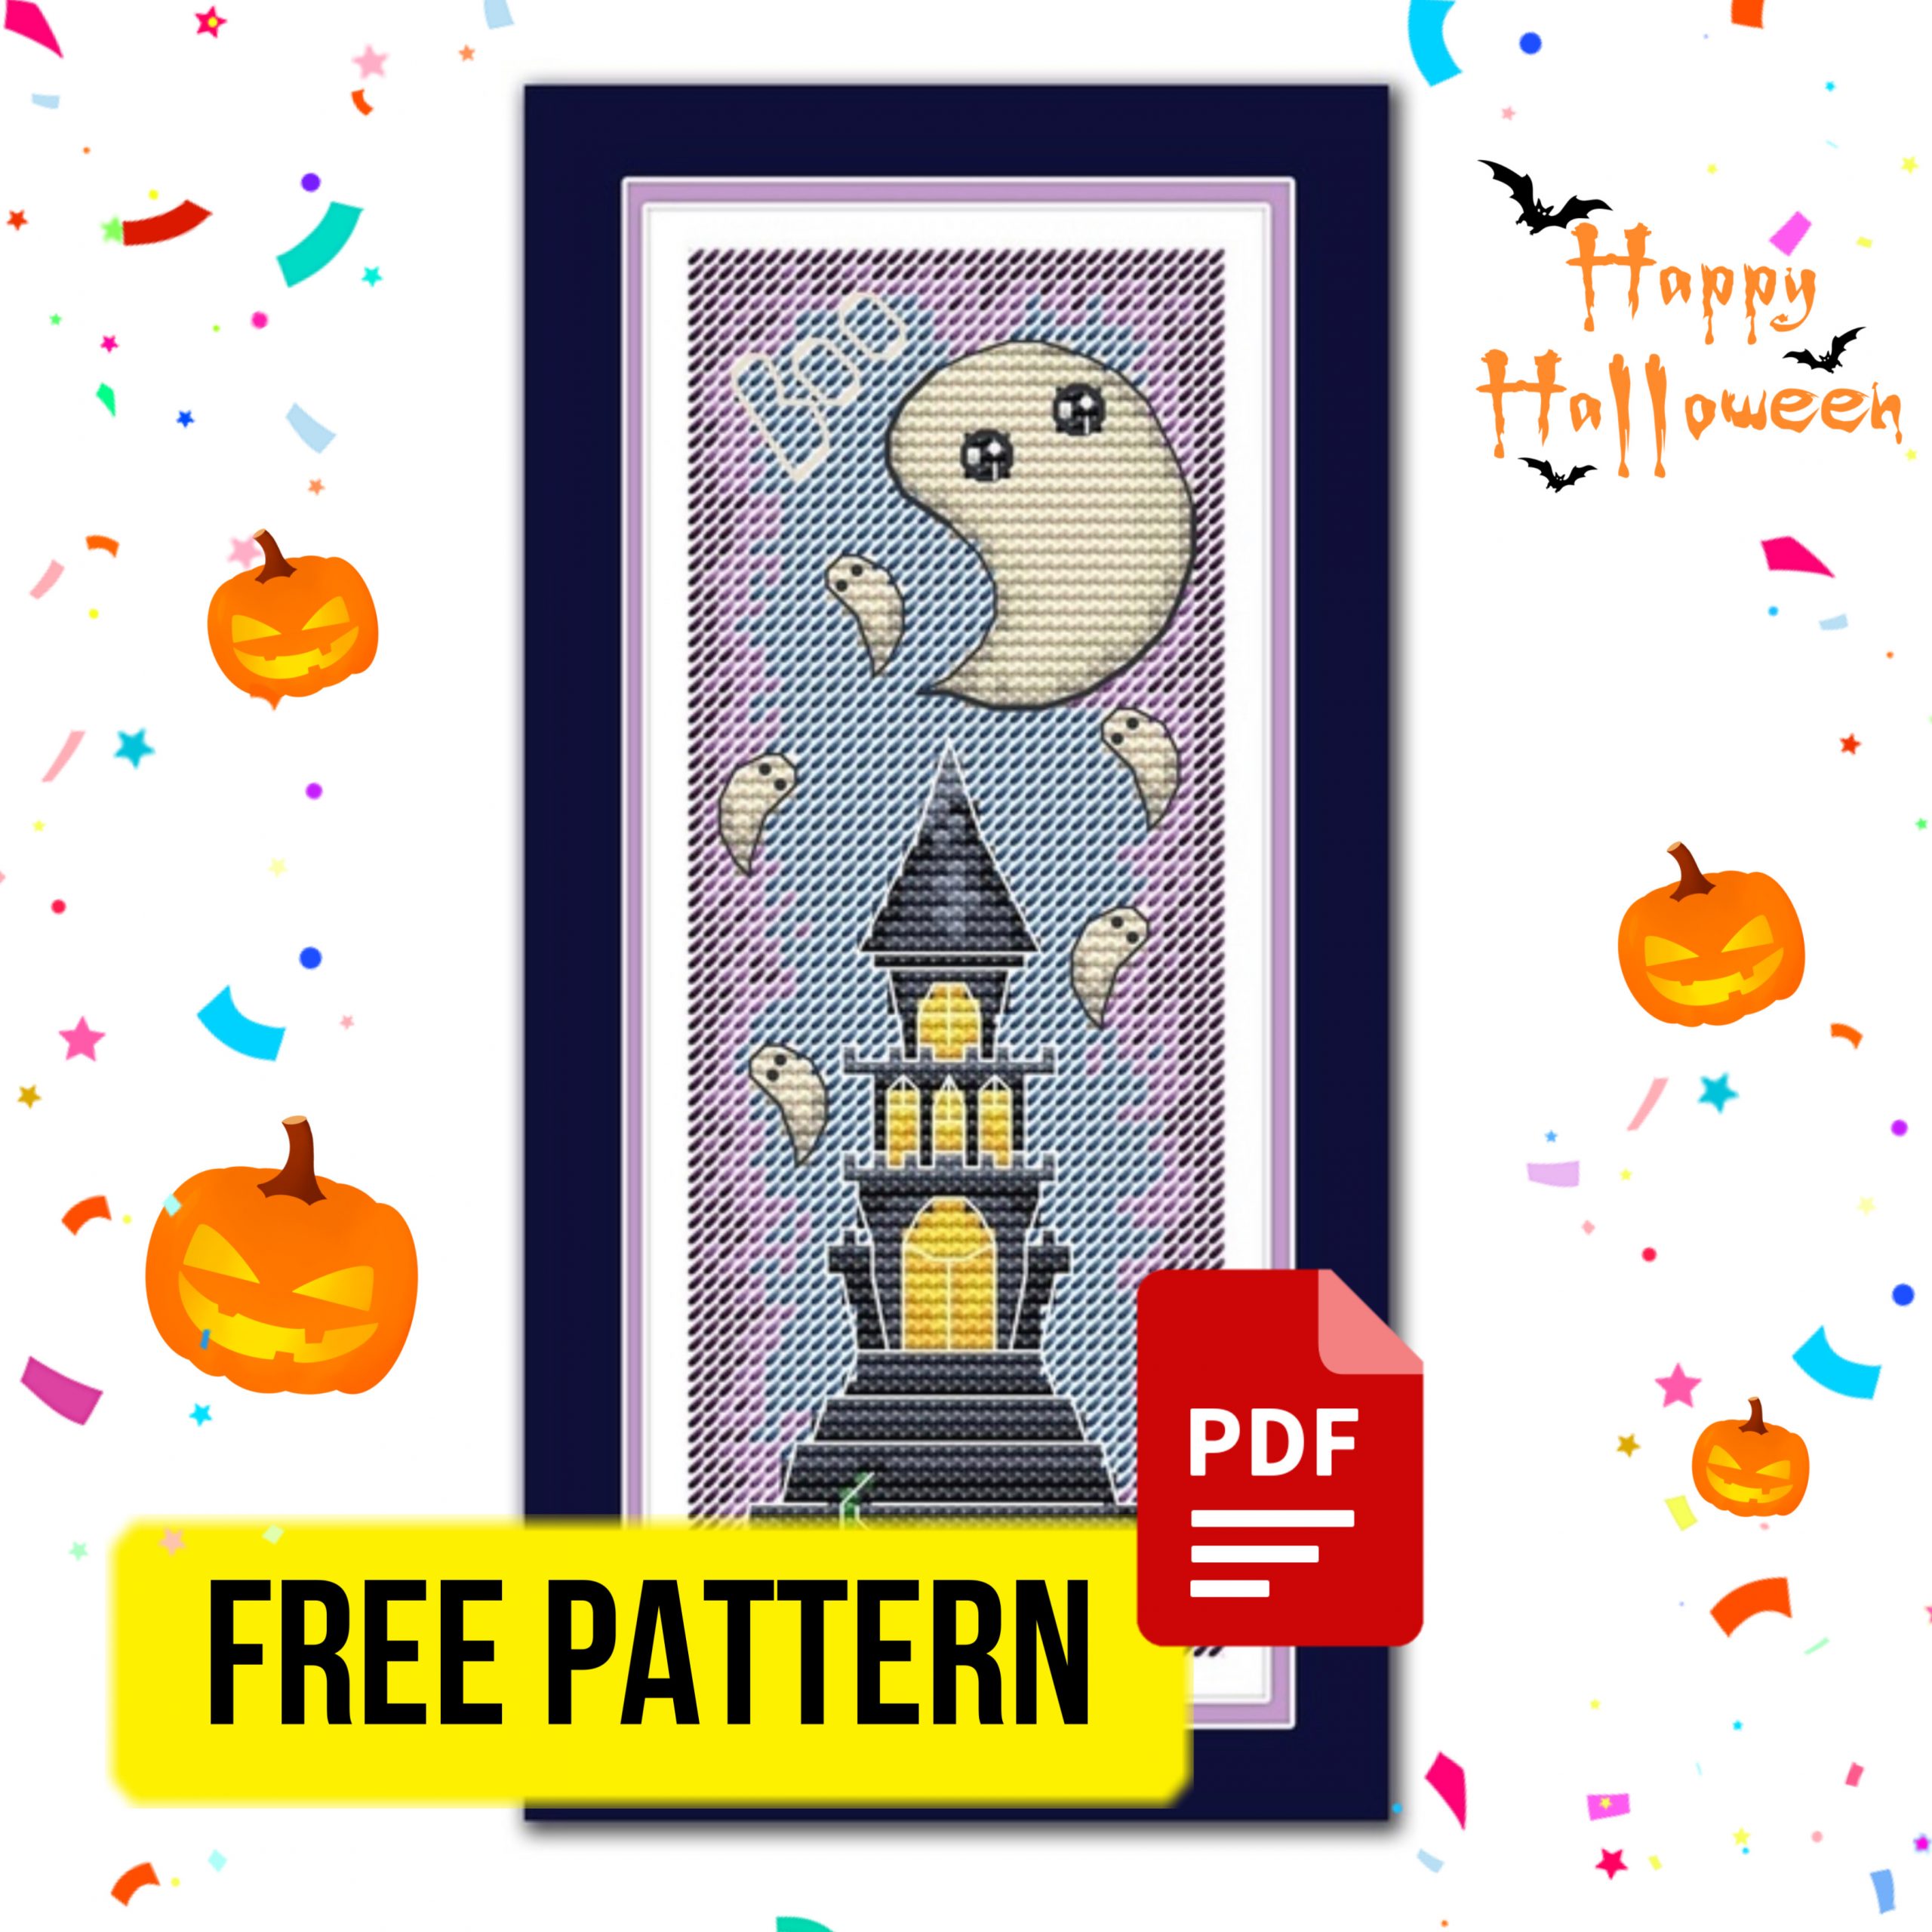 “Halloween bookmark” – free cross stitch pattern